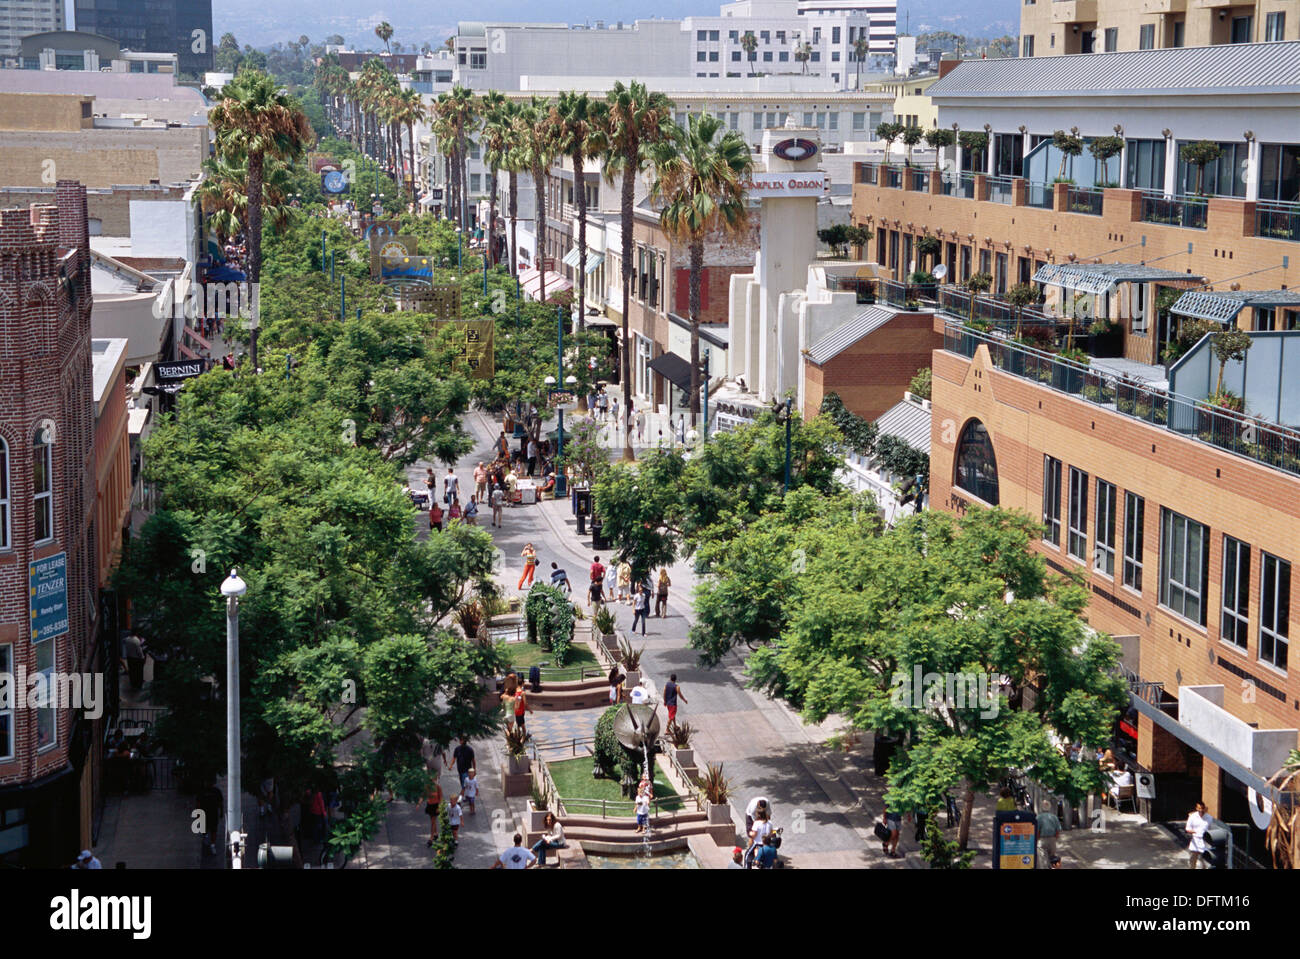 Third Street Promenade, Santa Monica, CA - California Beaches